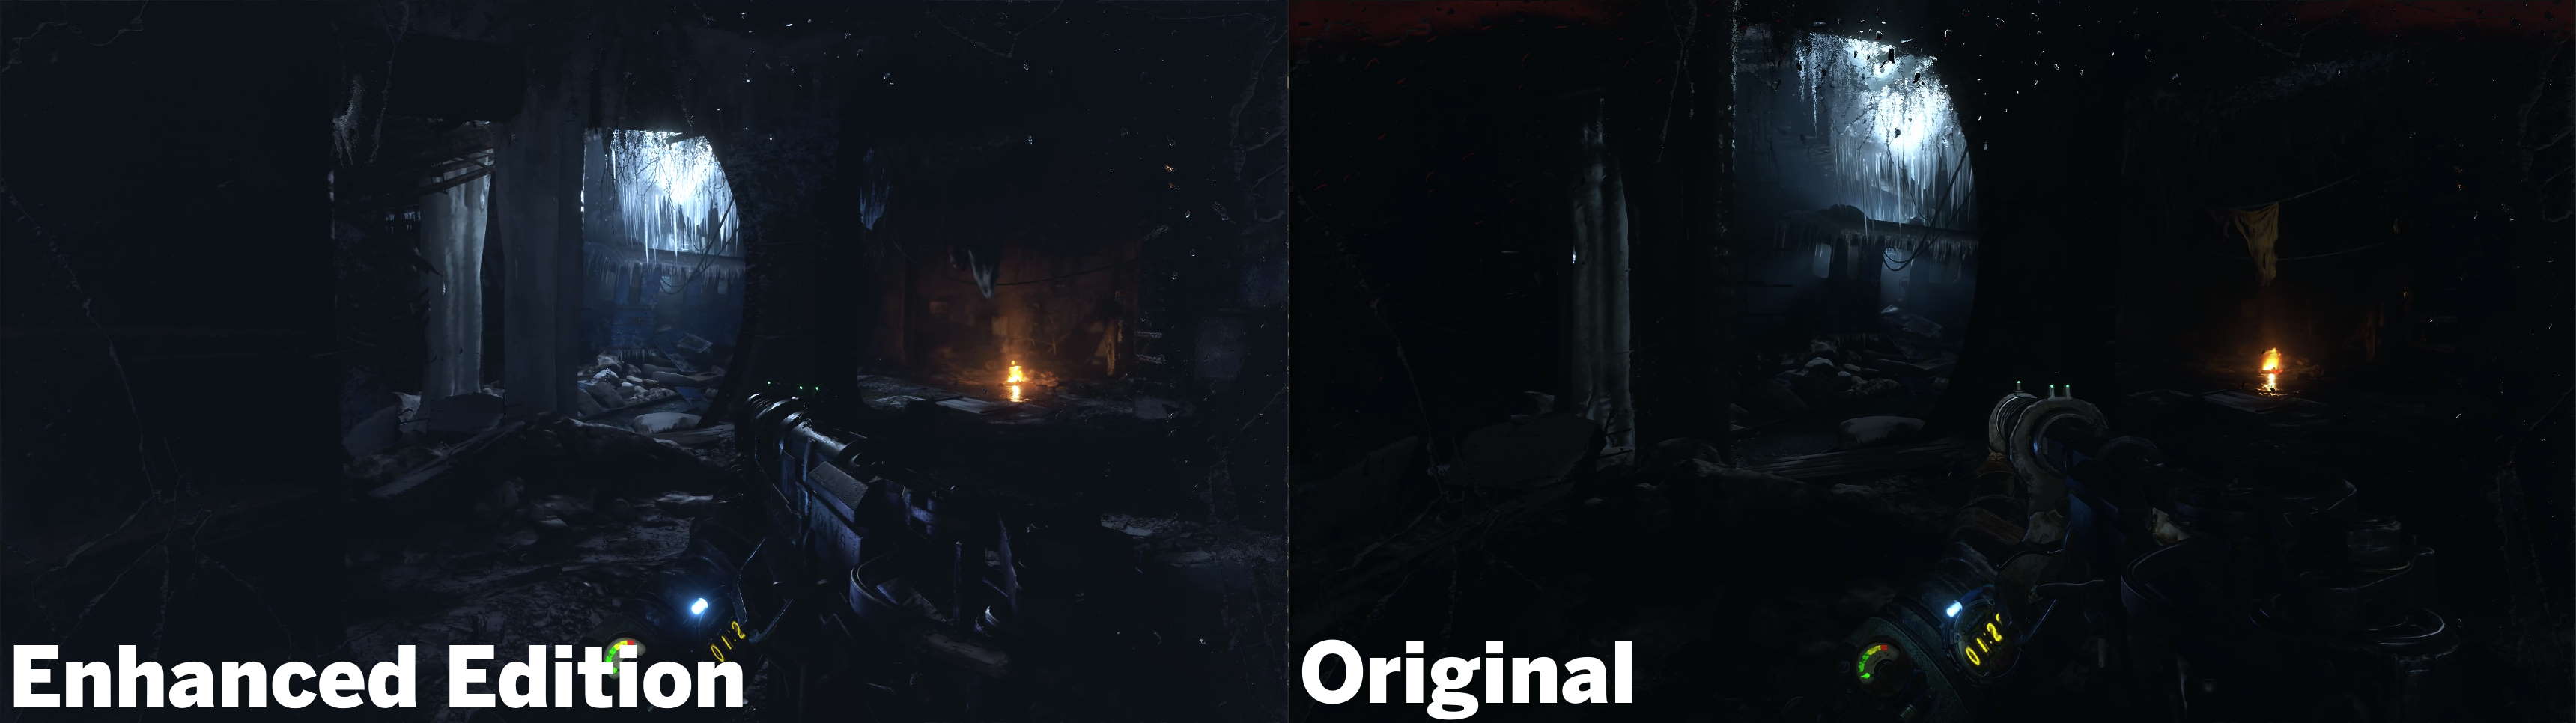 Metro Exodus Enhanced Edition compared with the Original Edition